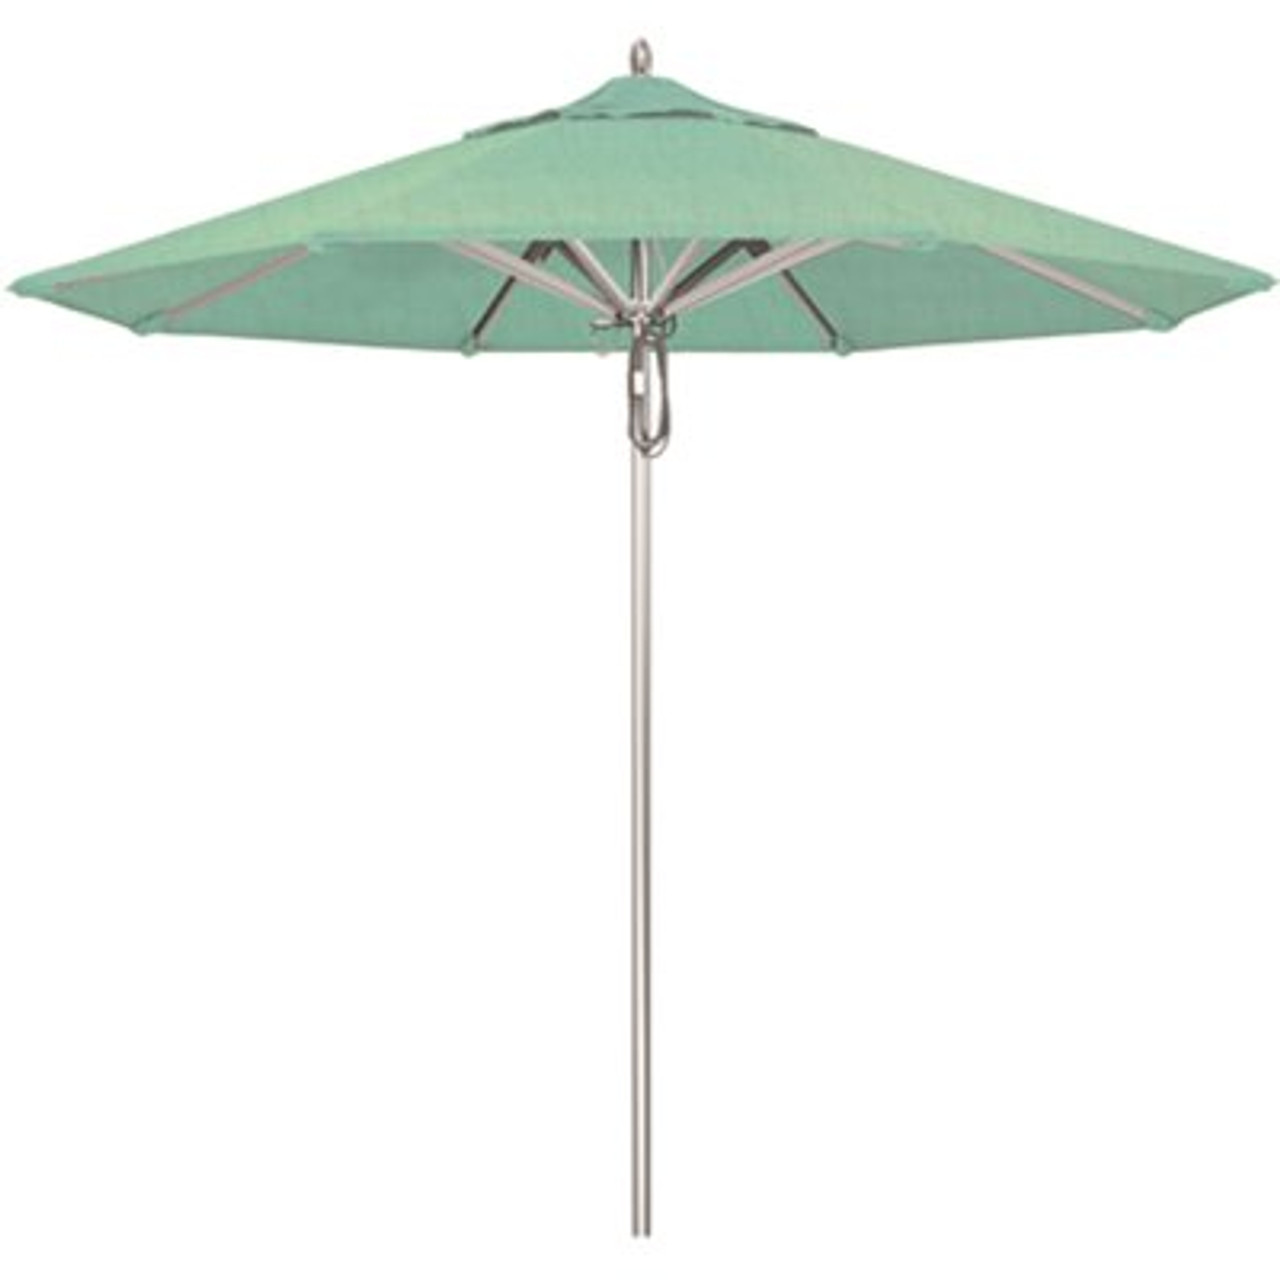 California Umbrella 9 ft. Silver Aluminum Commercial Market Patio Umbrella with Pulley Lift in Spectrum Mist Sunbrella